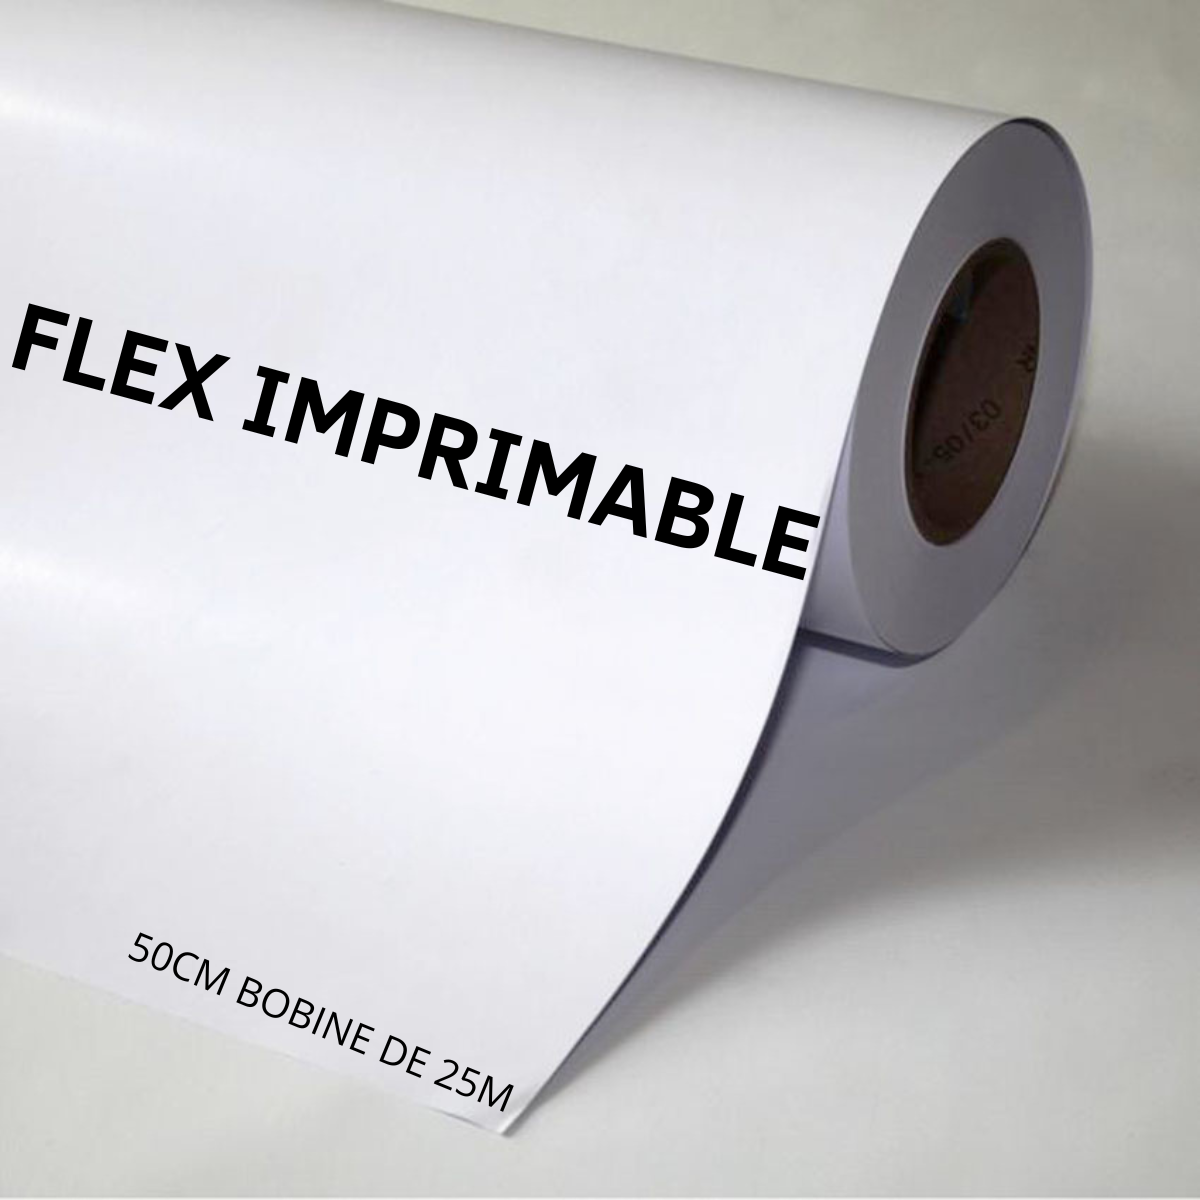 FLEX IMPRIMABLE (bobine de 25m)